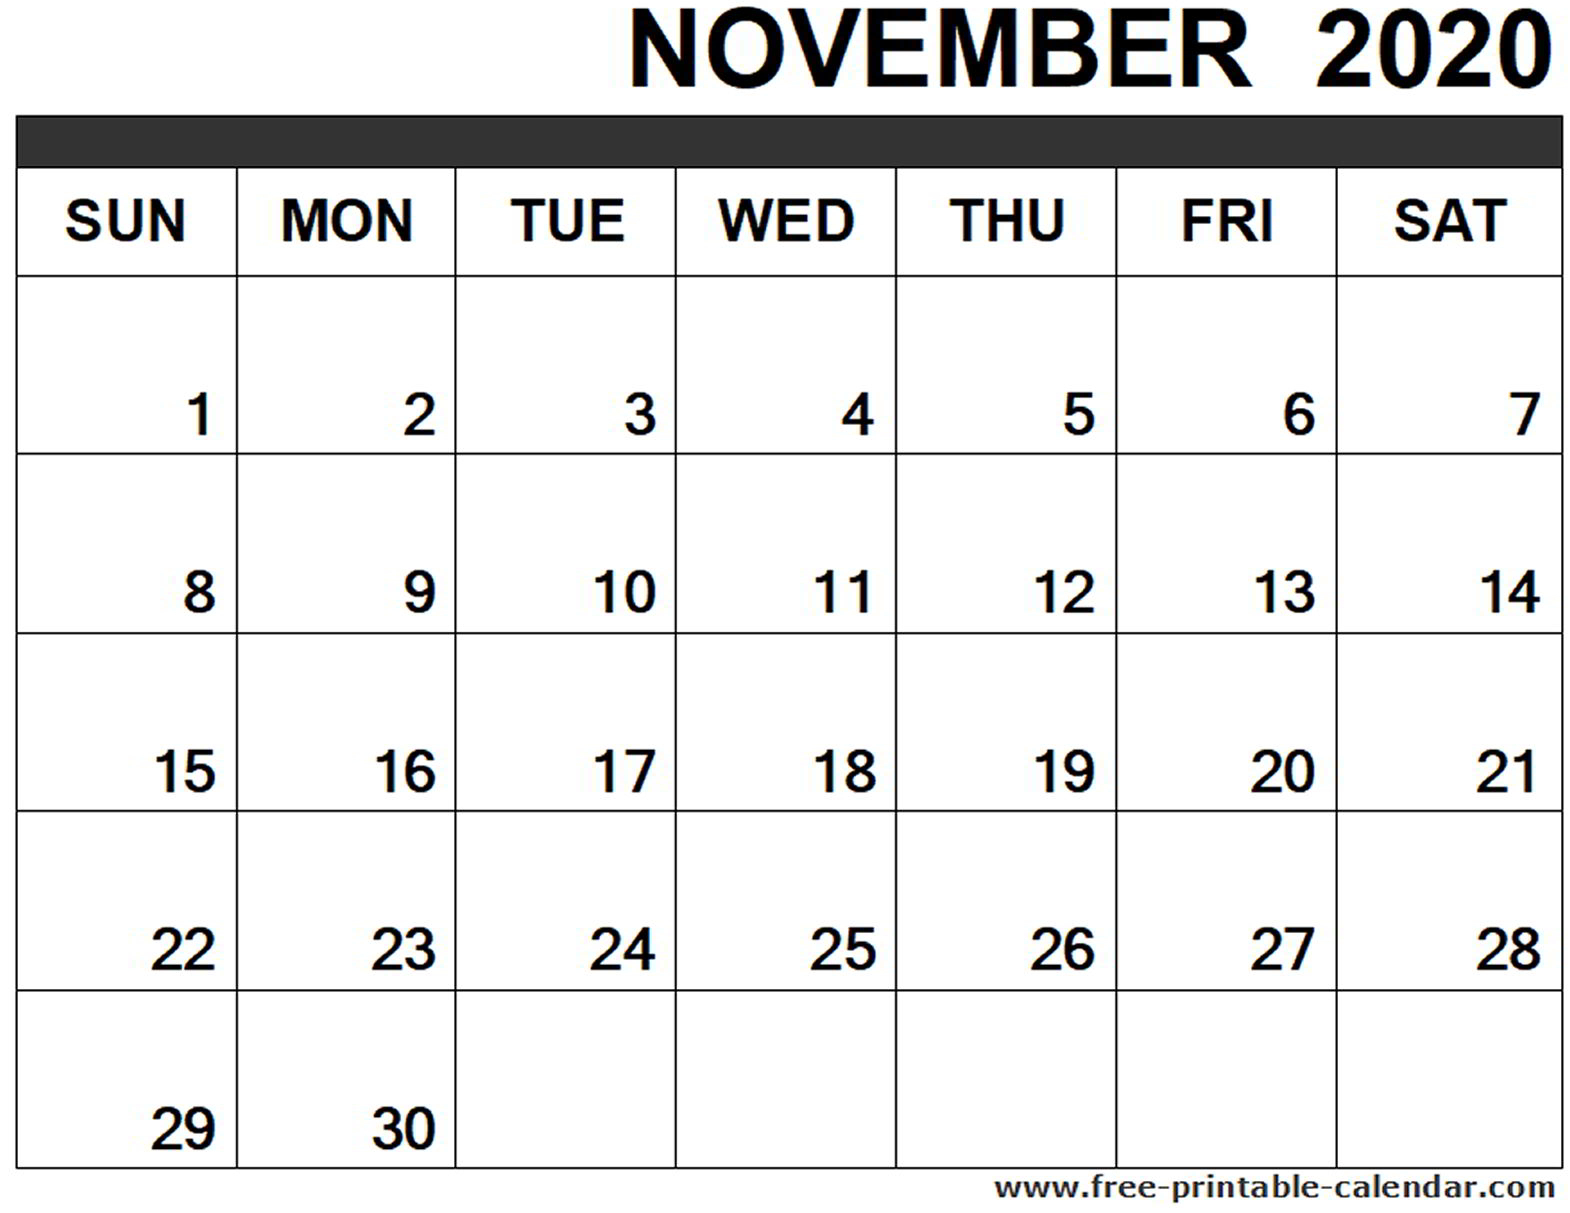 November 2020 Calendar Printable - Free-Printable-Calendar